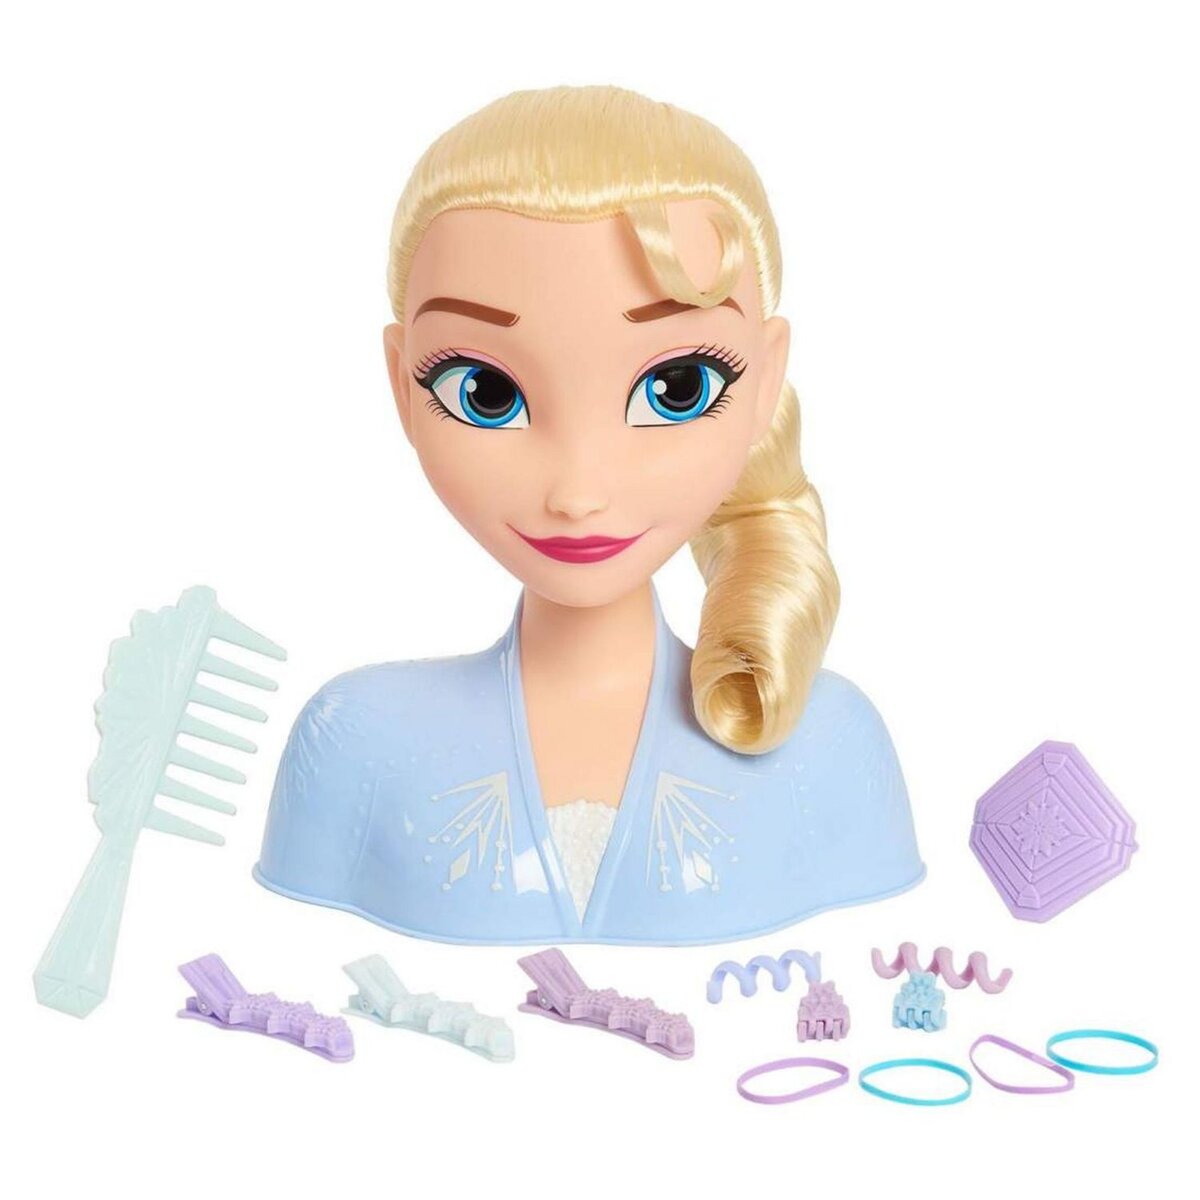 Promo Disney princess / gp toys tête à coiffer deluxe raiponce